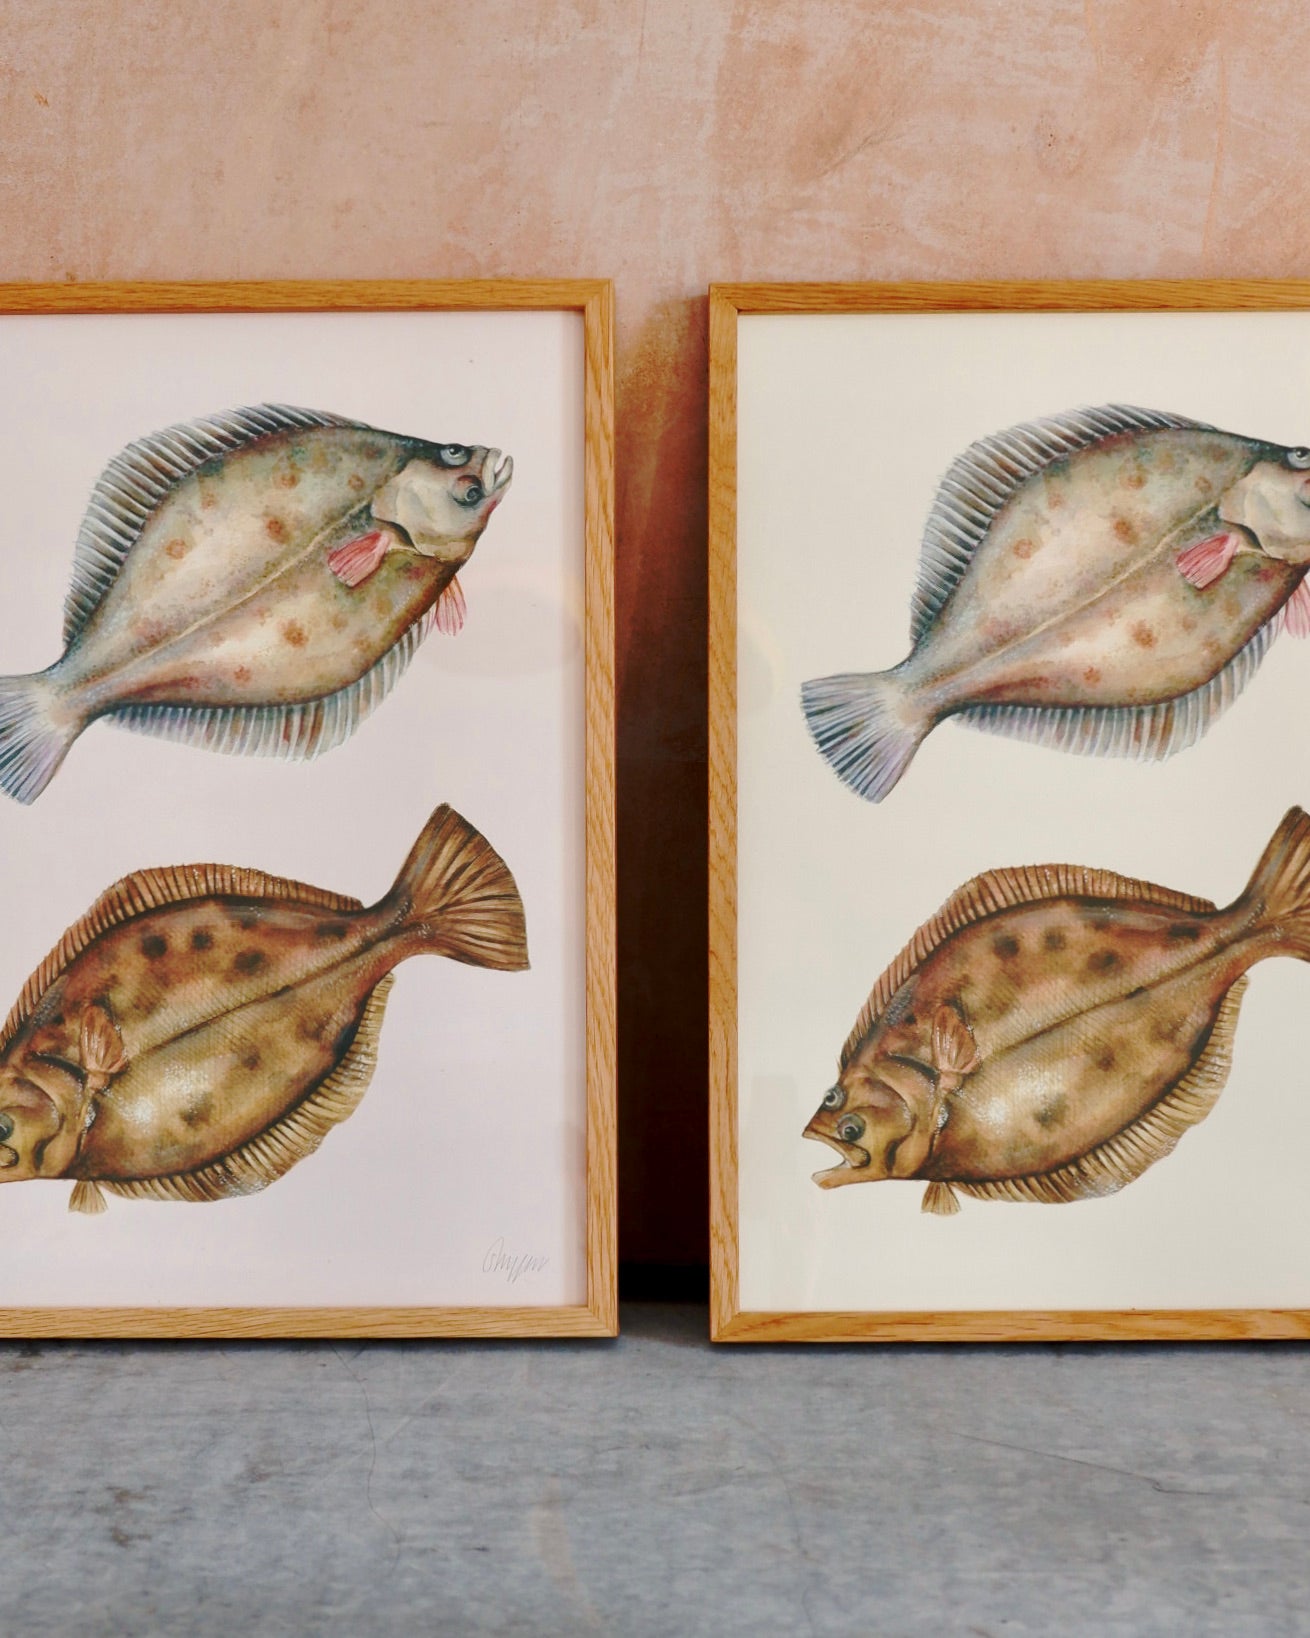 Flatfish - framed A3 print sophie myers artwork seaside watercolour fish wildlife print